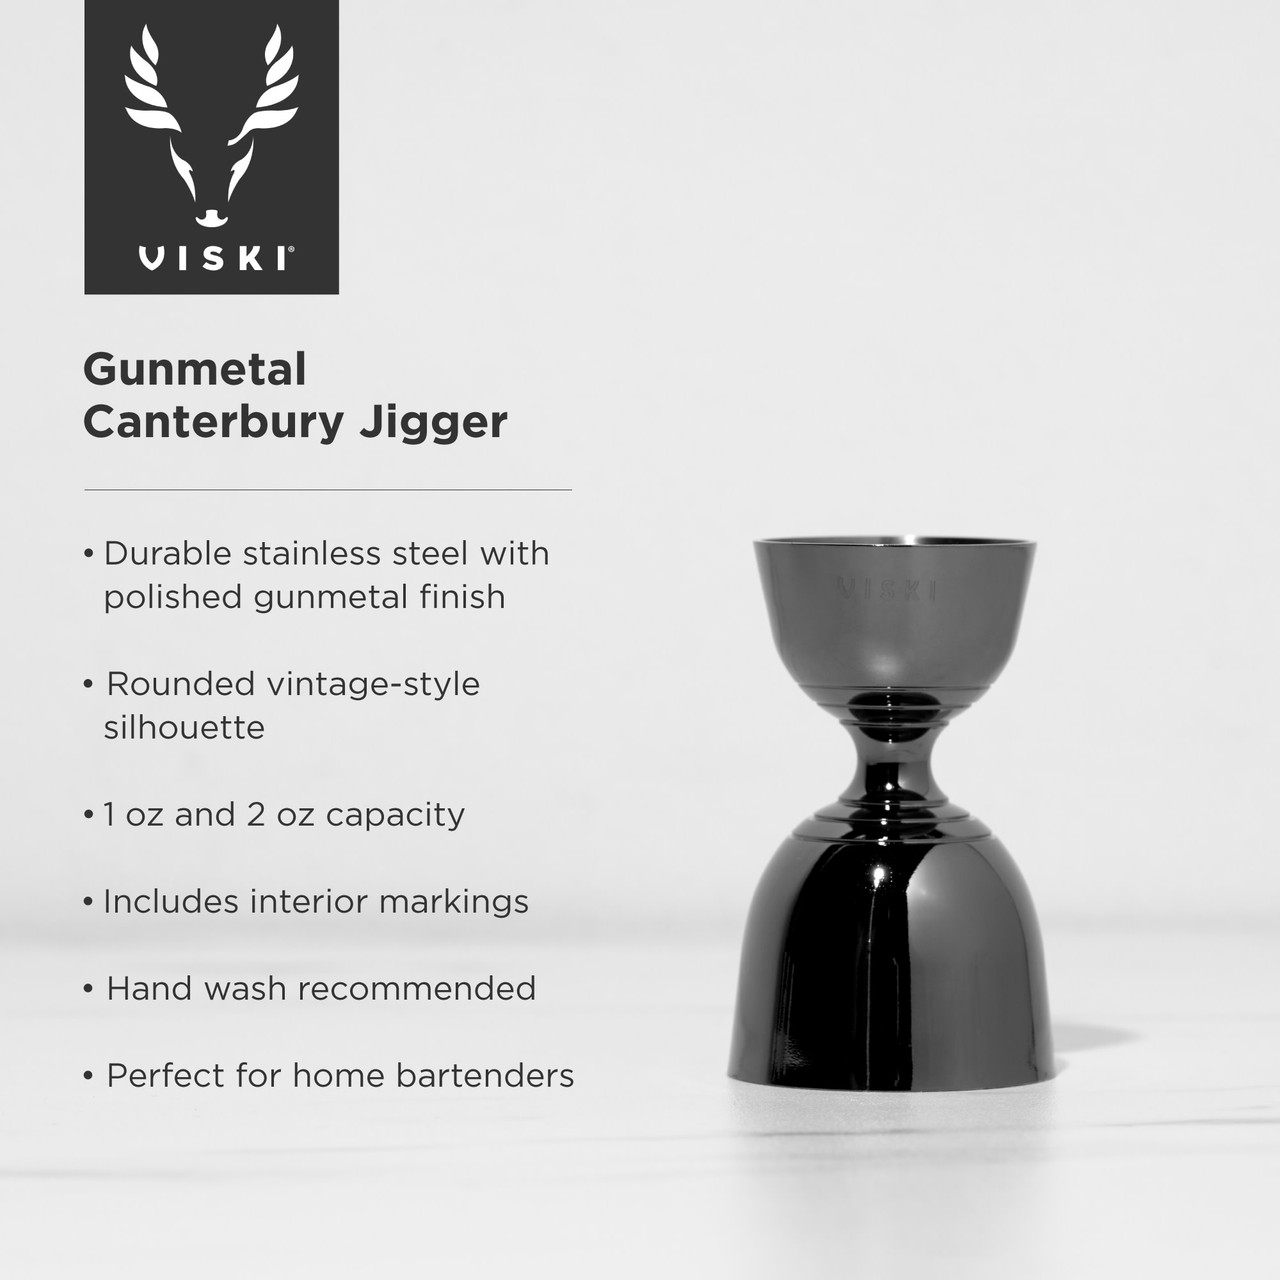 Gunmetal Canterbury Jigger by Viski®